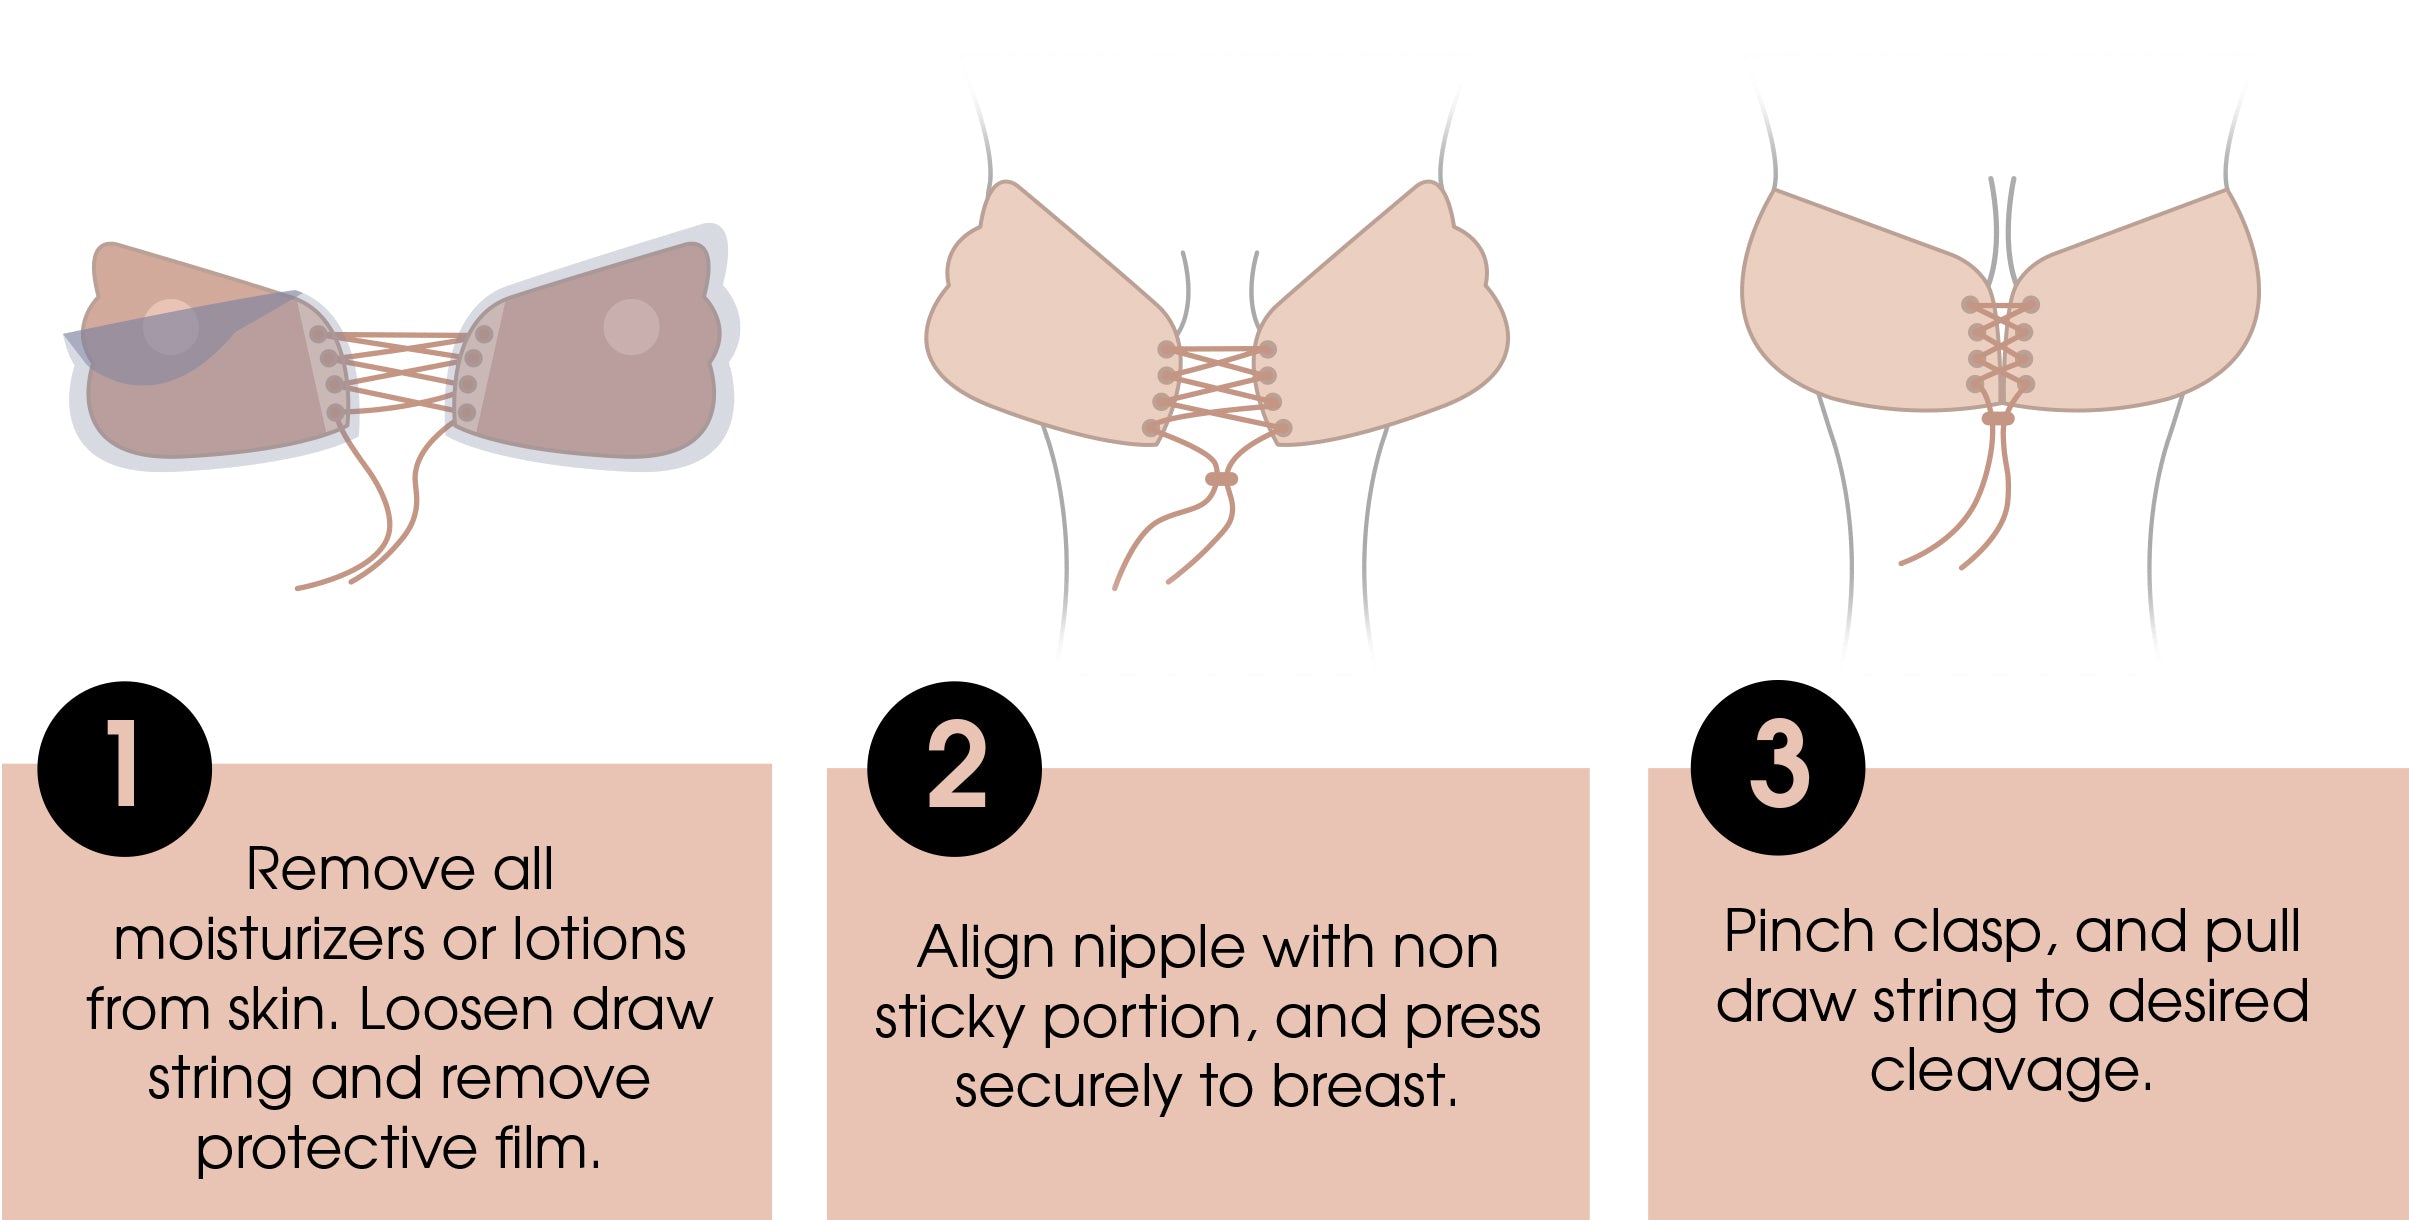 How to make cleavage without a bra! #BelanjaDiTikTokLagi #BeliLokal